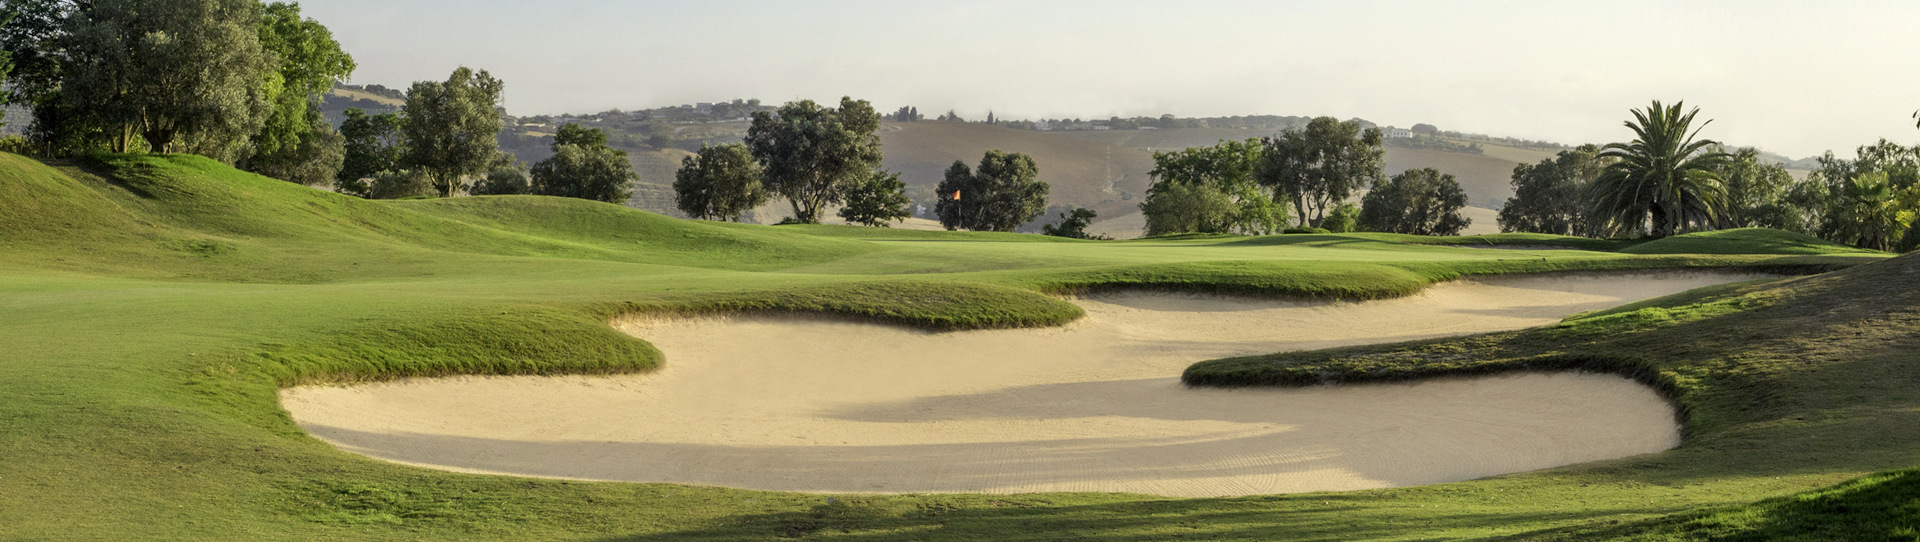 Spain golf courses - Sherry Golf Jerez - Photo 1